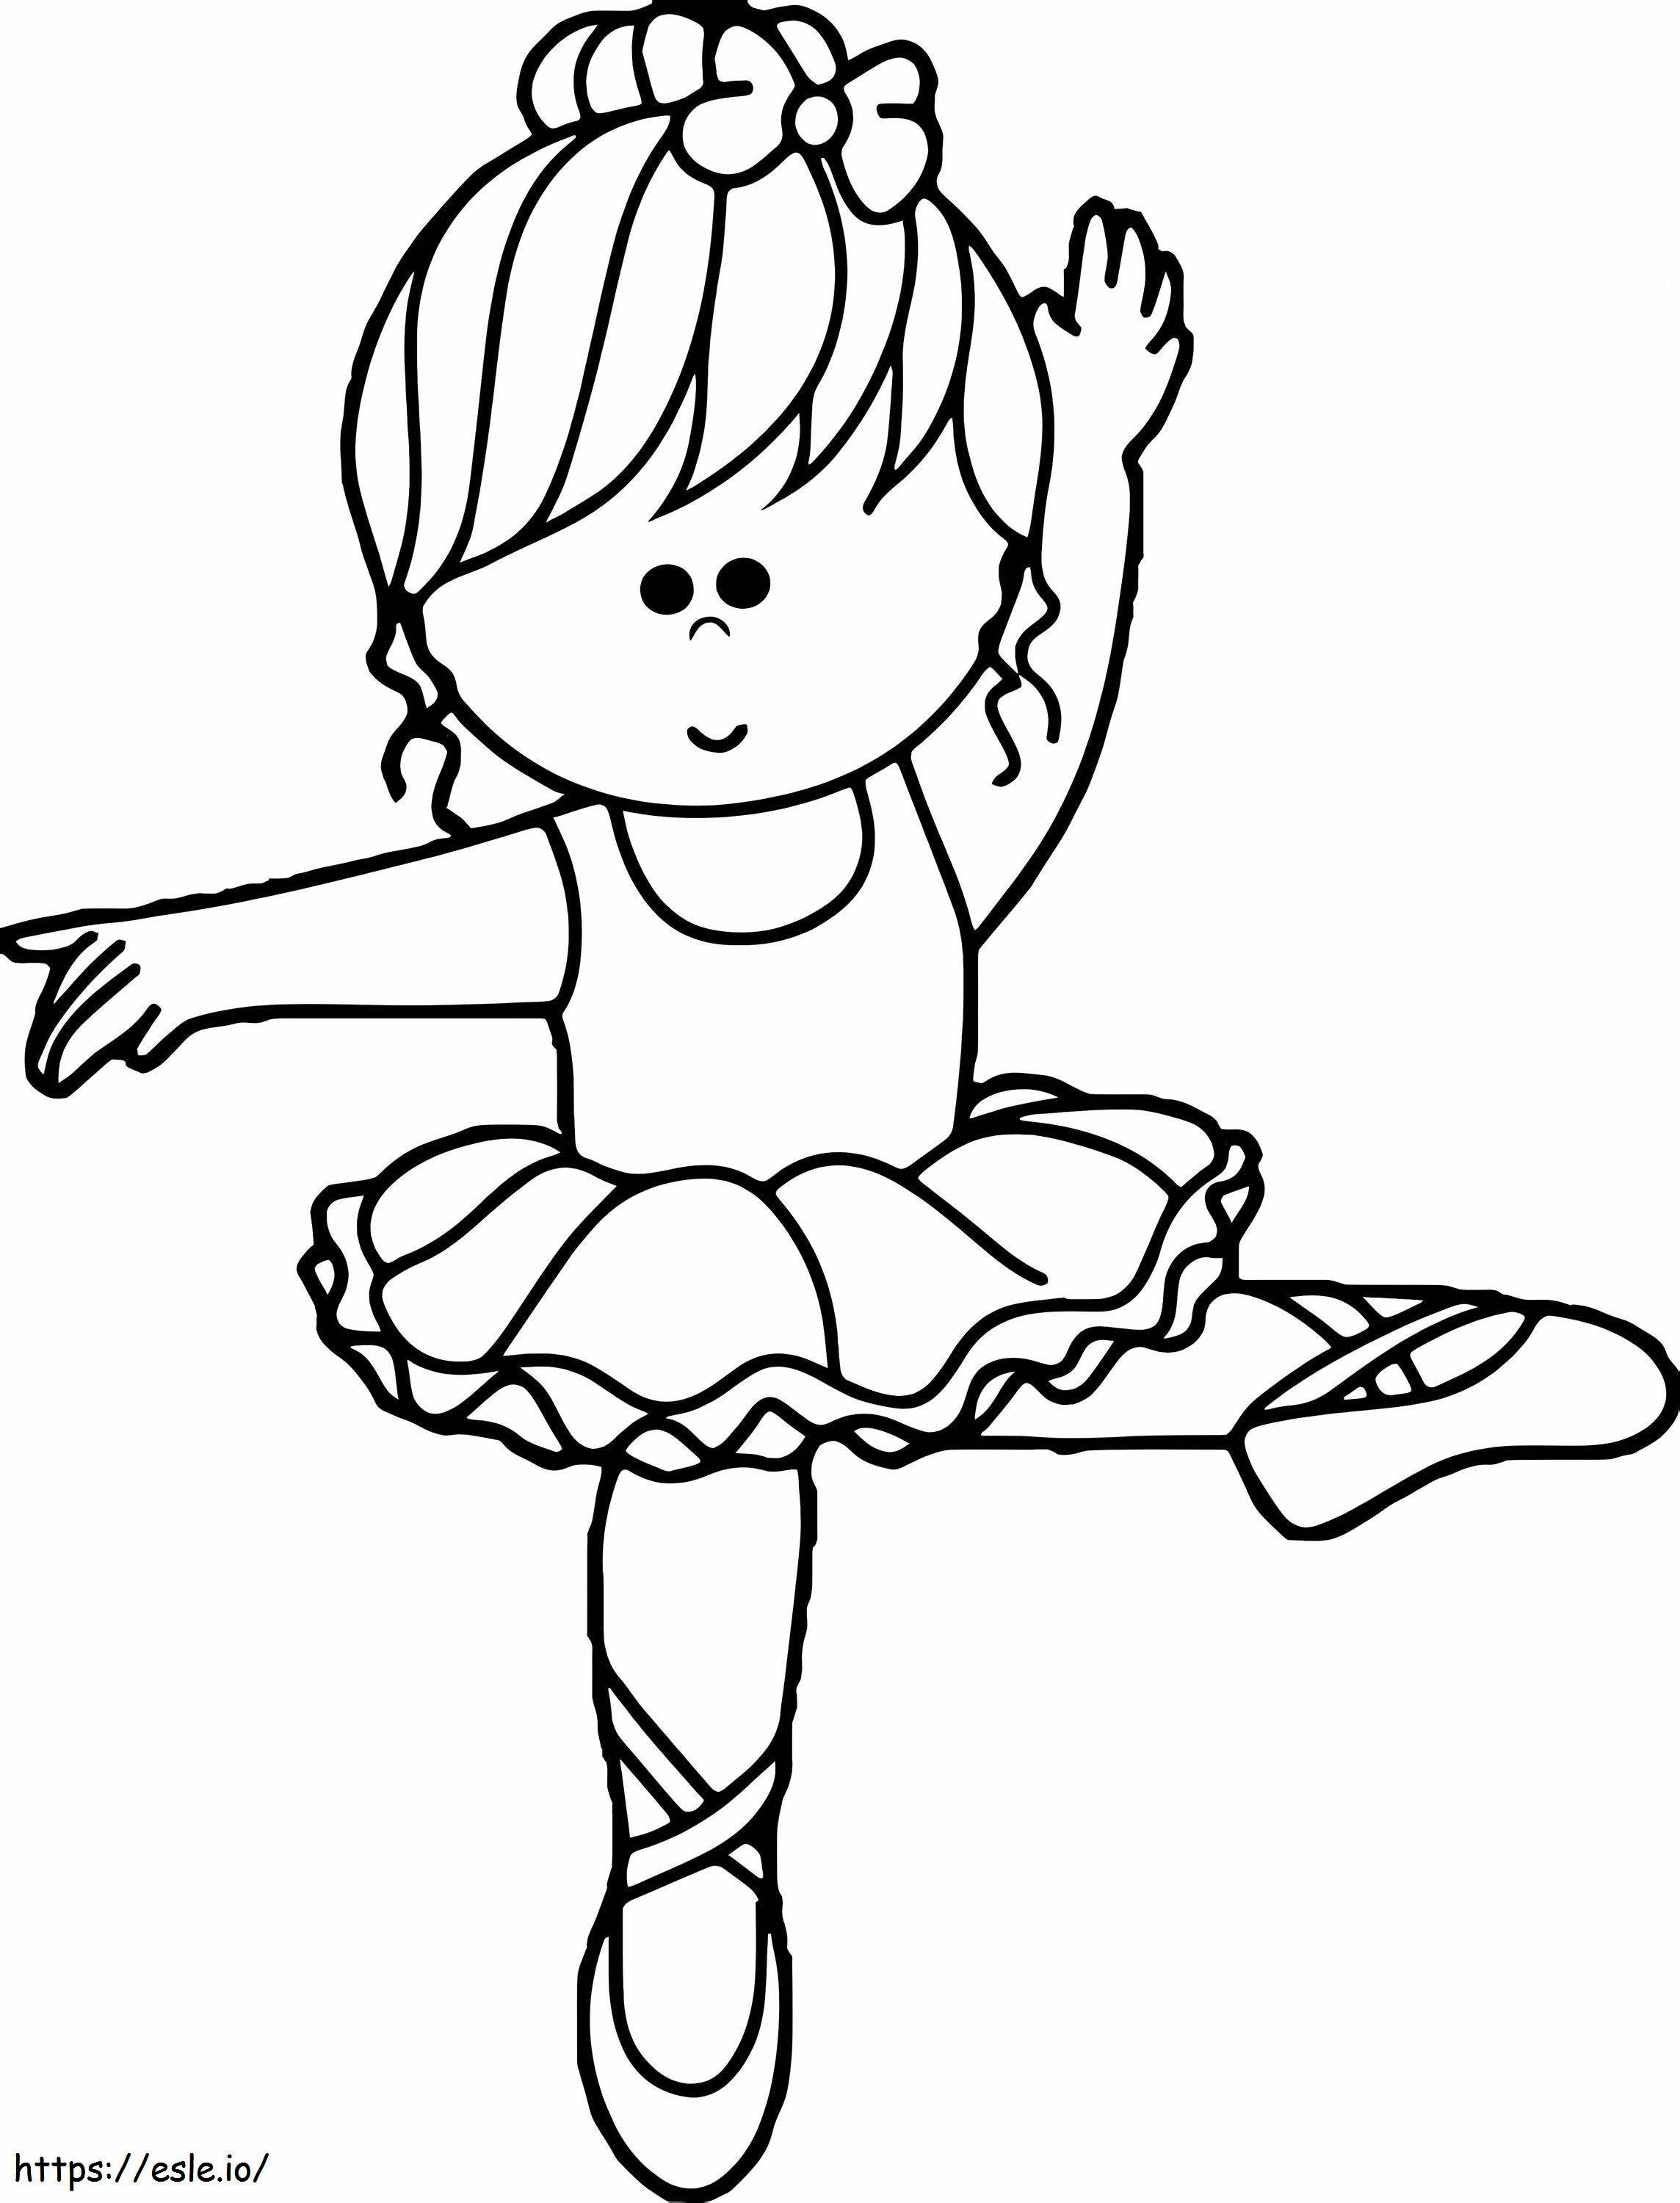 Bailarina de desenho animado para colorir